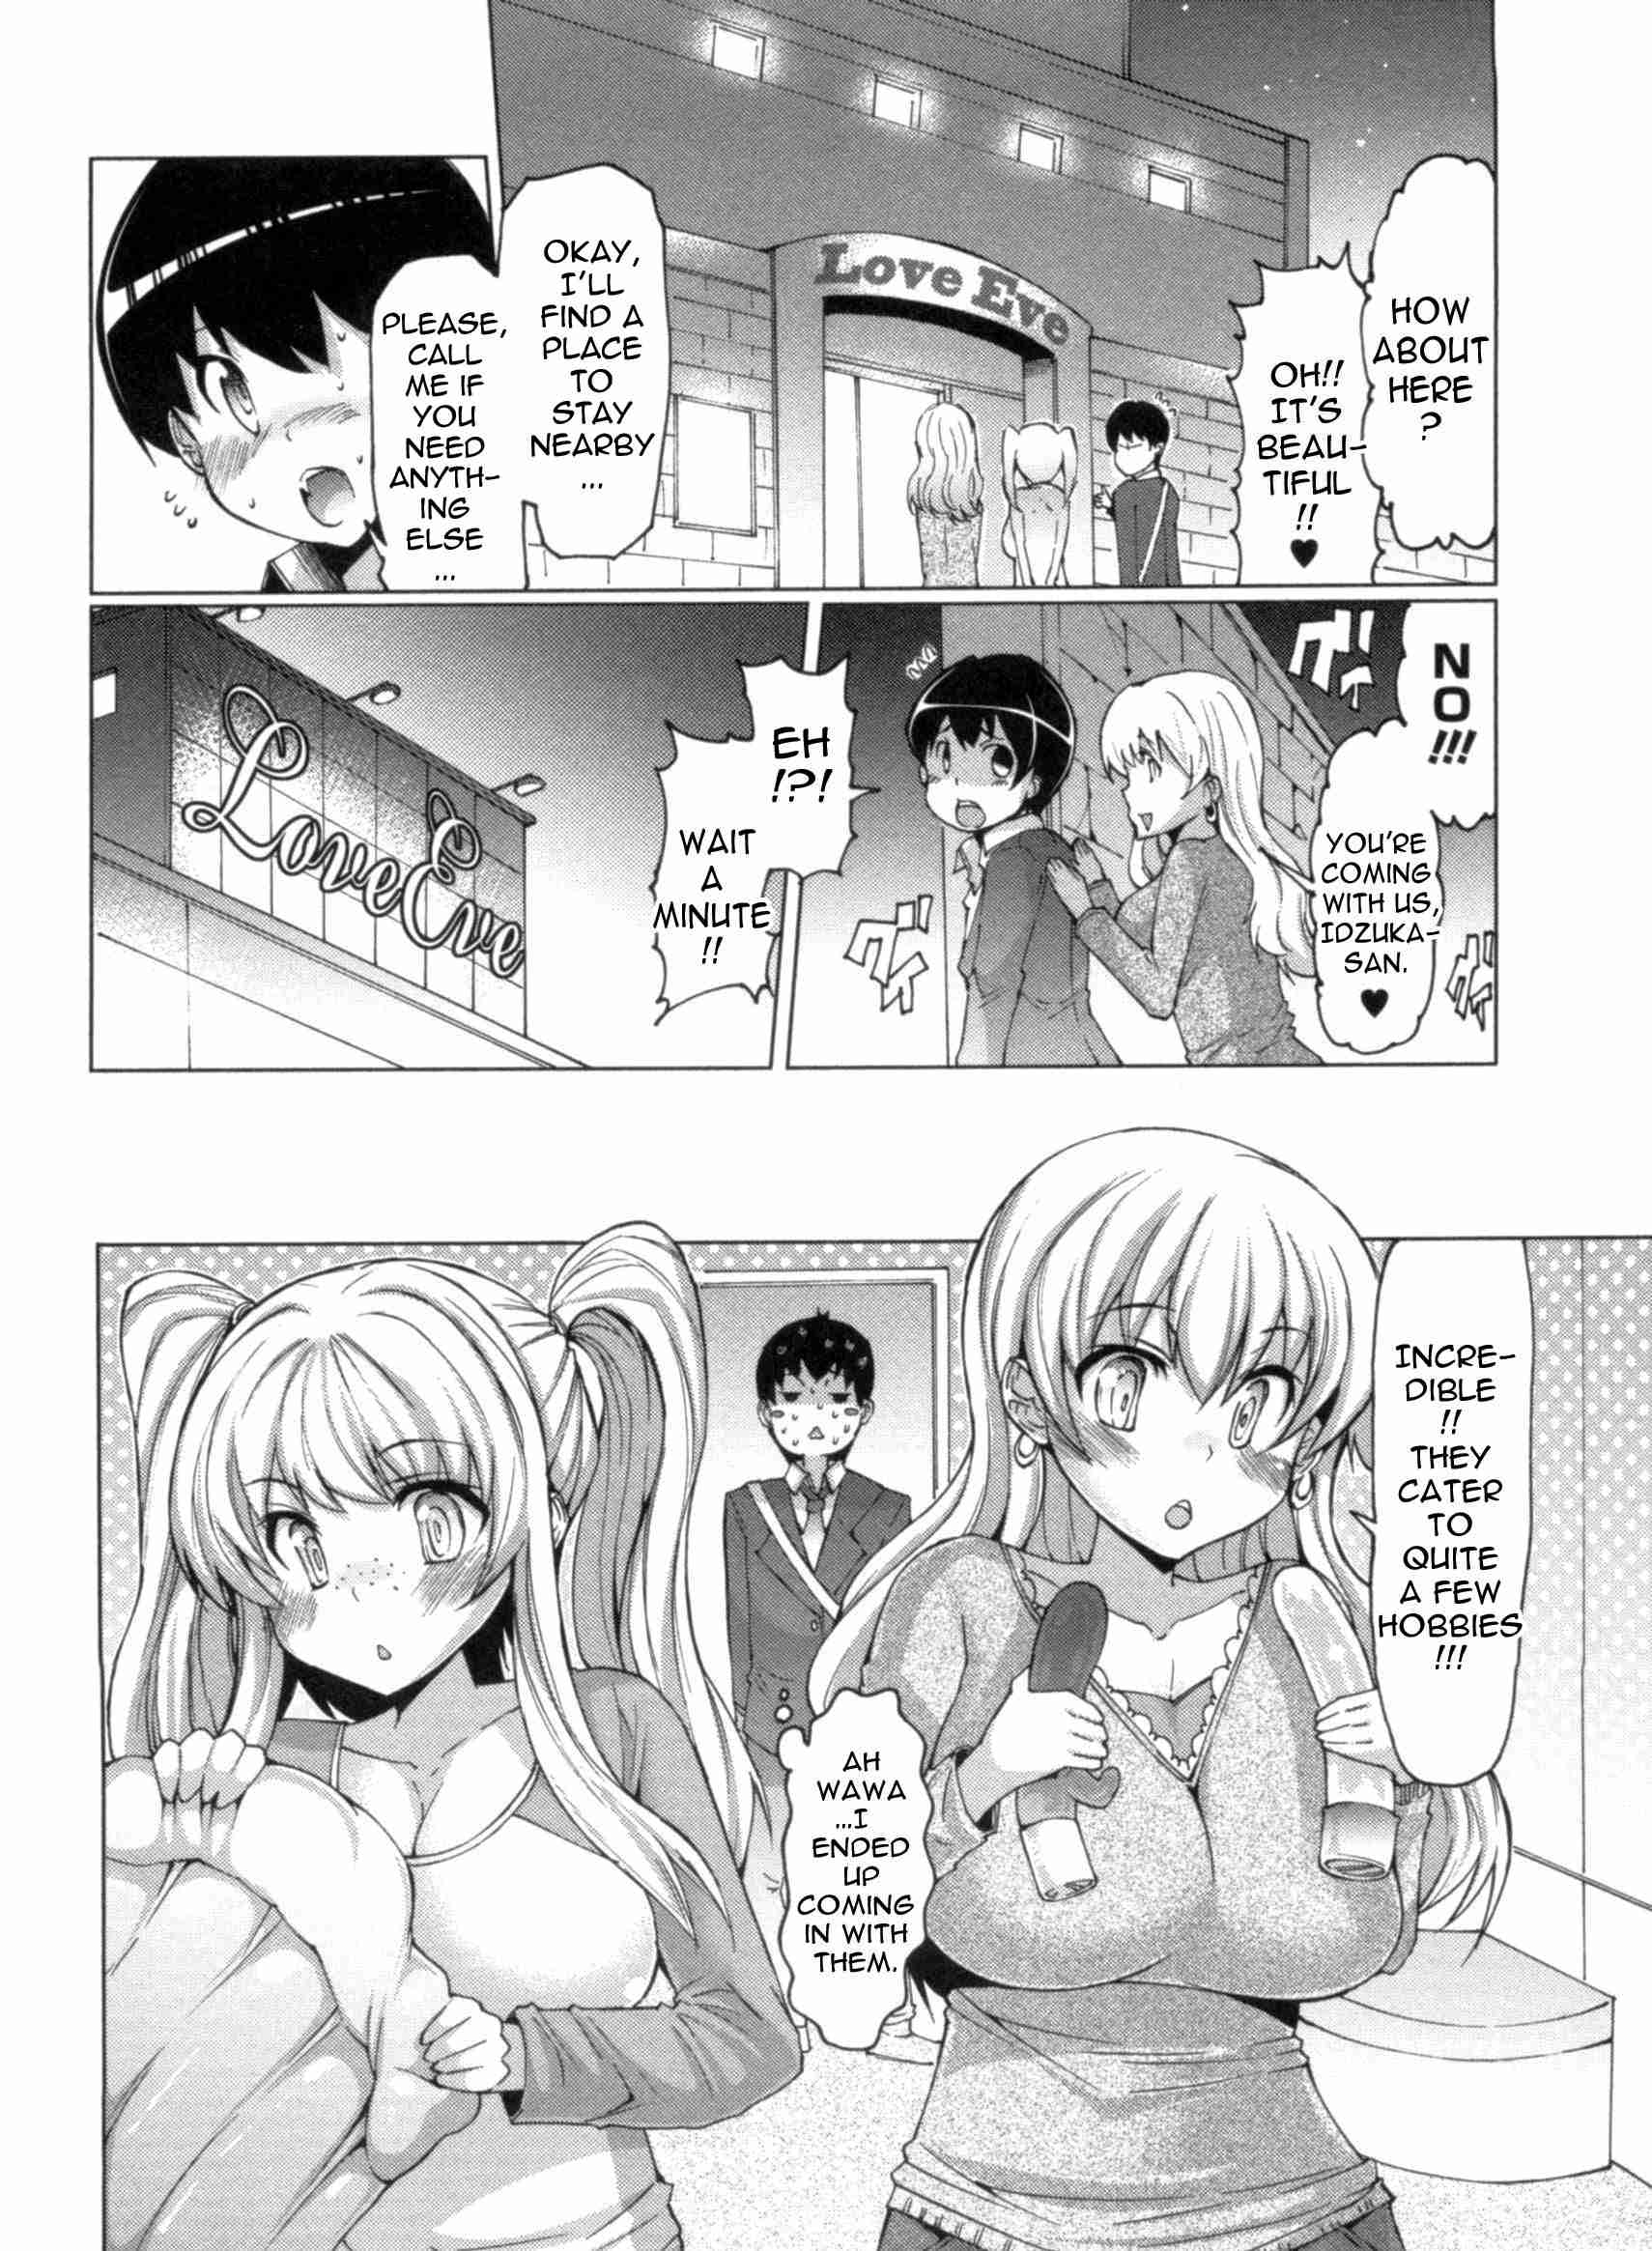 Reading Sex Slave Volunteer Hentai 9 Memories Of Japan Page 4 Hentai Manga Online At 